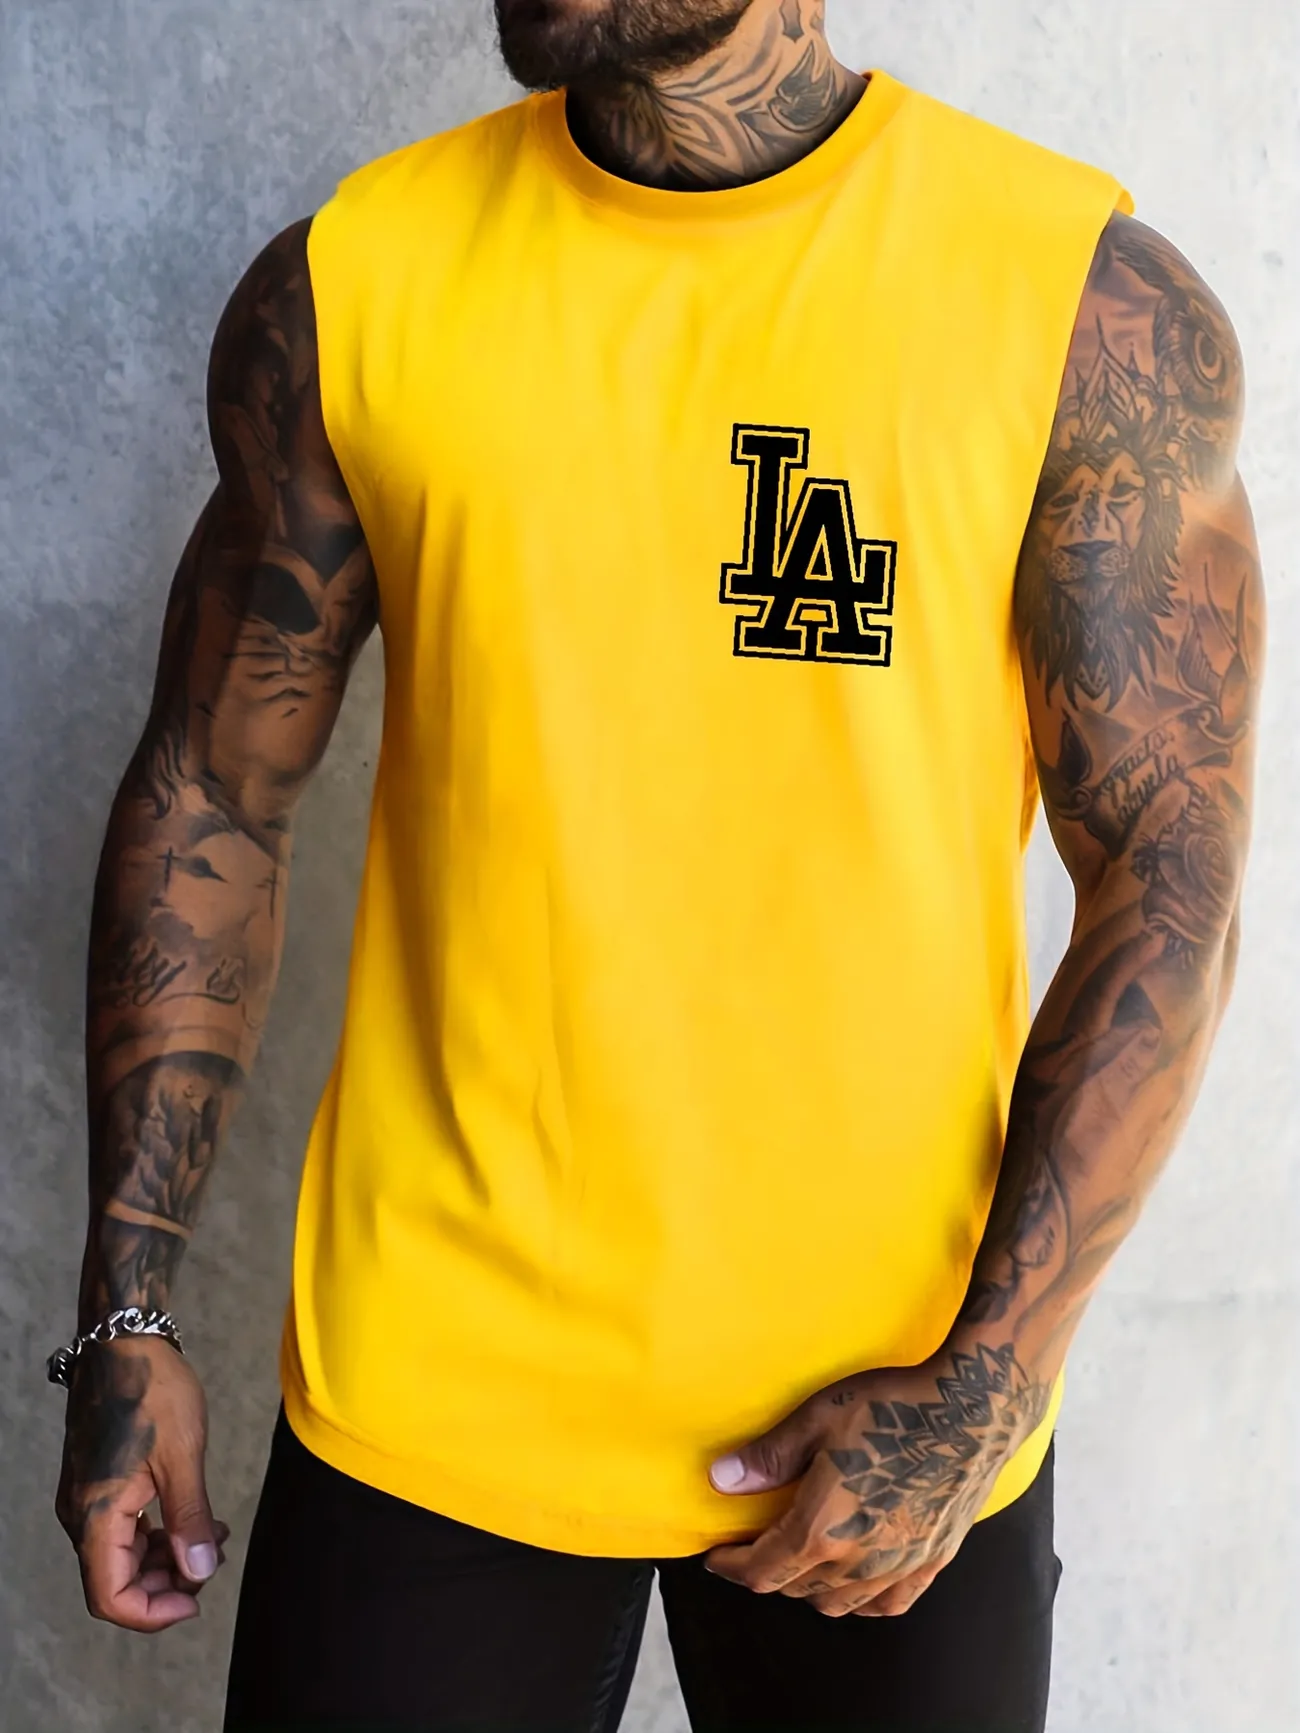 lakers workout shirt